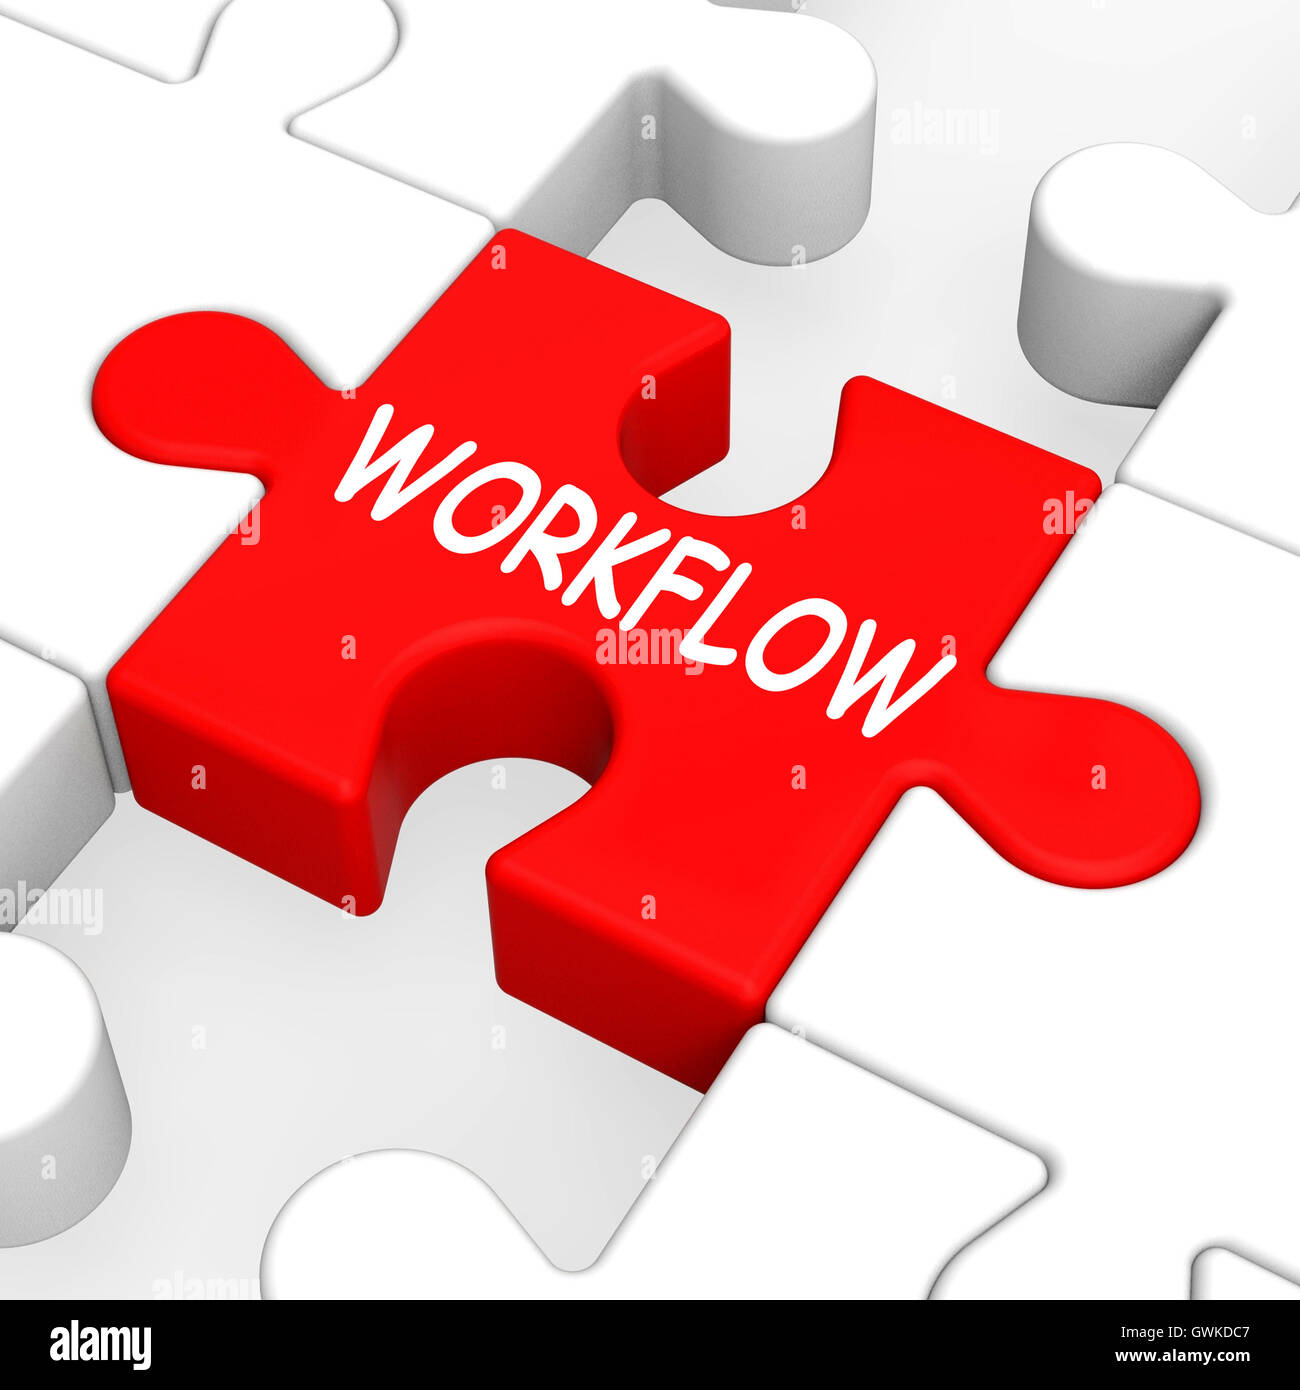 Workflow Puzzle Shows Process Flow Or Procedure Stock Photo